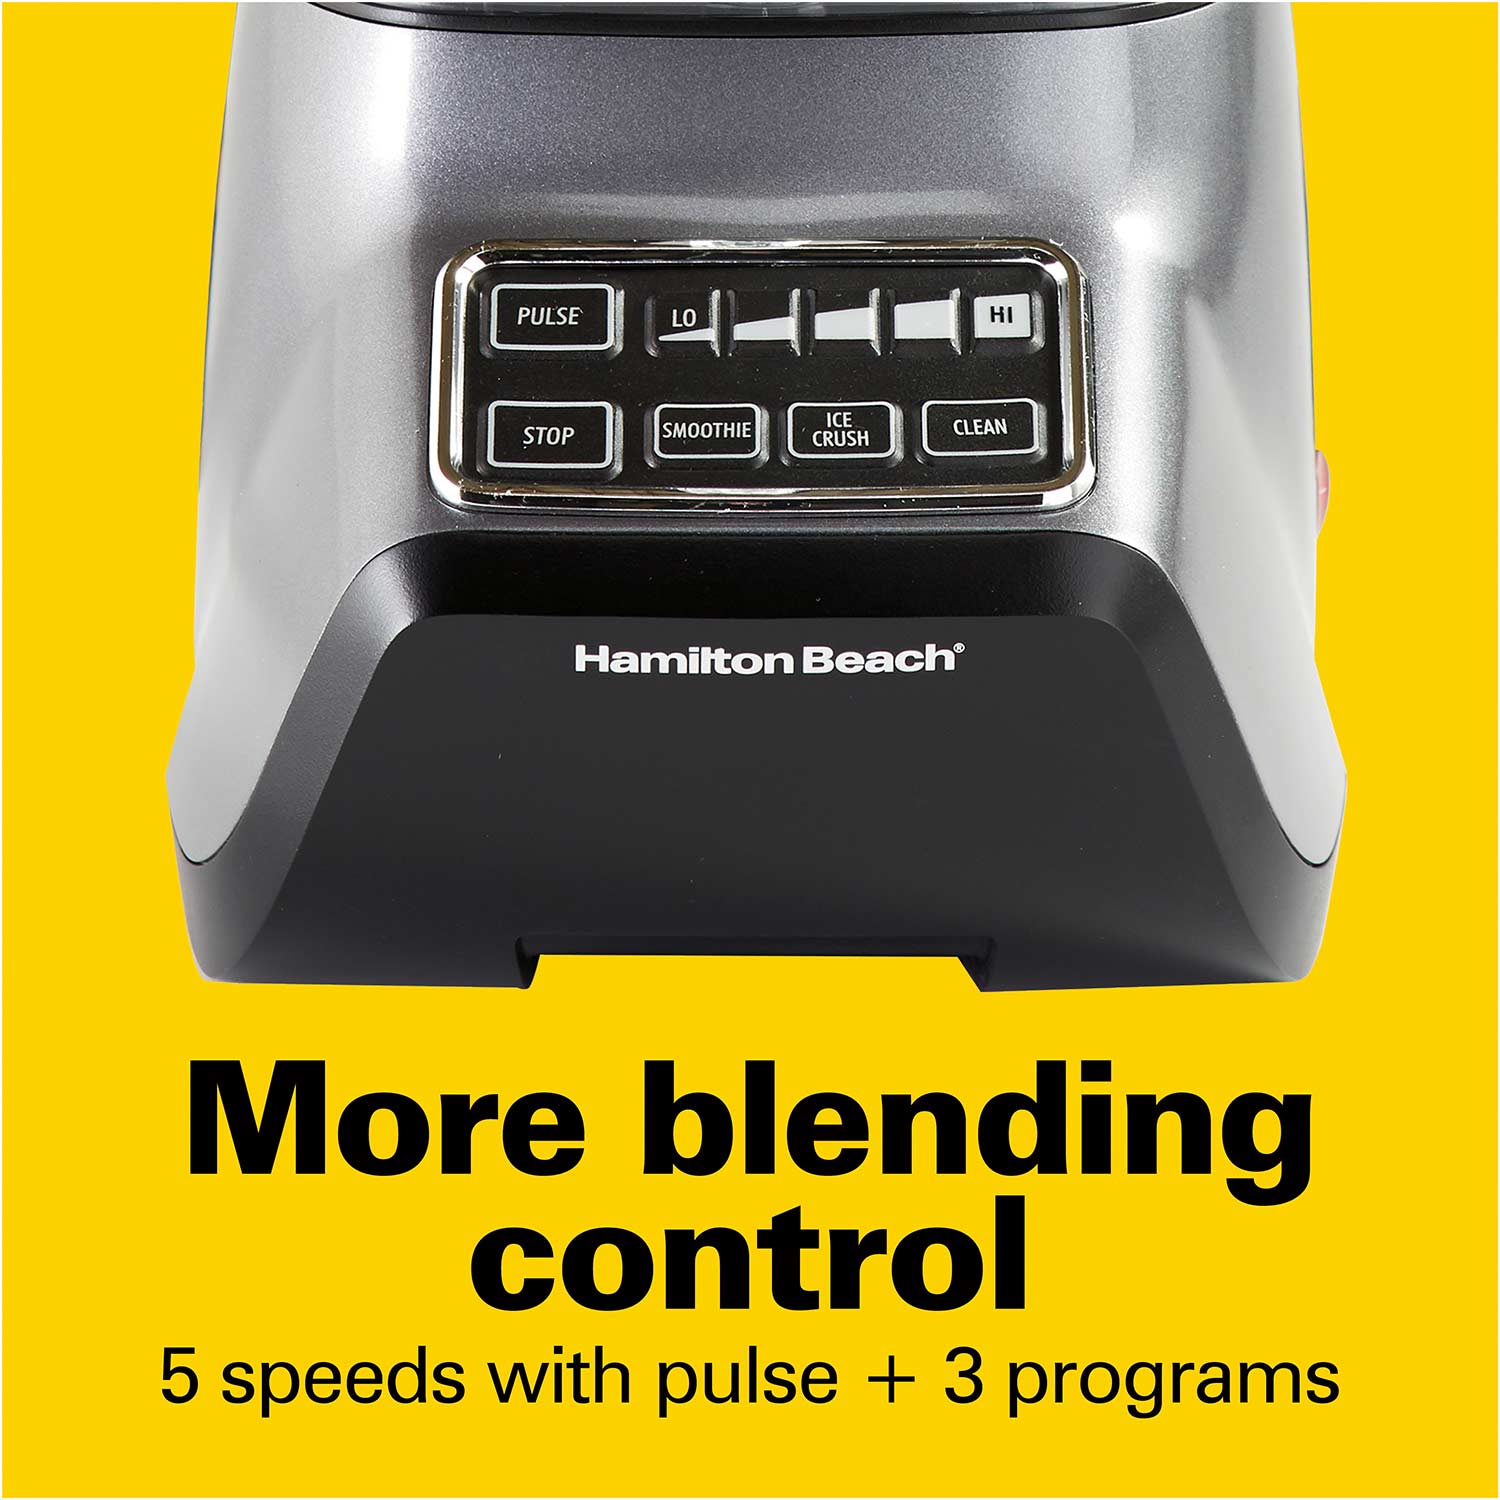 Hamilton Beach SoundShield 5-Speed Blender, 950 Watts, Ice Crush and C –  Popular Electronics